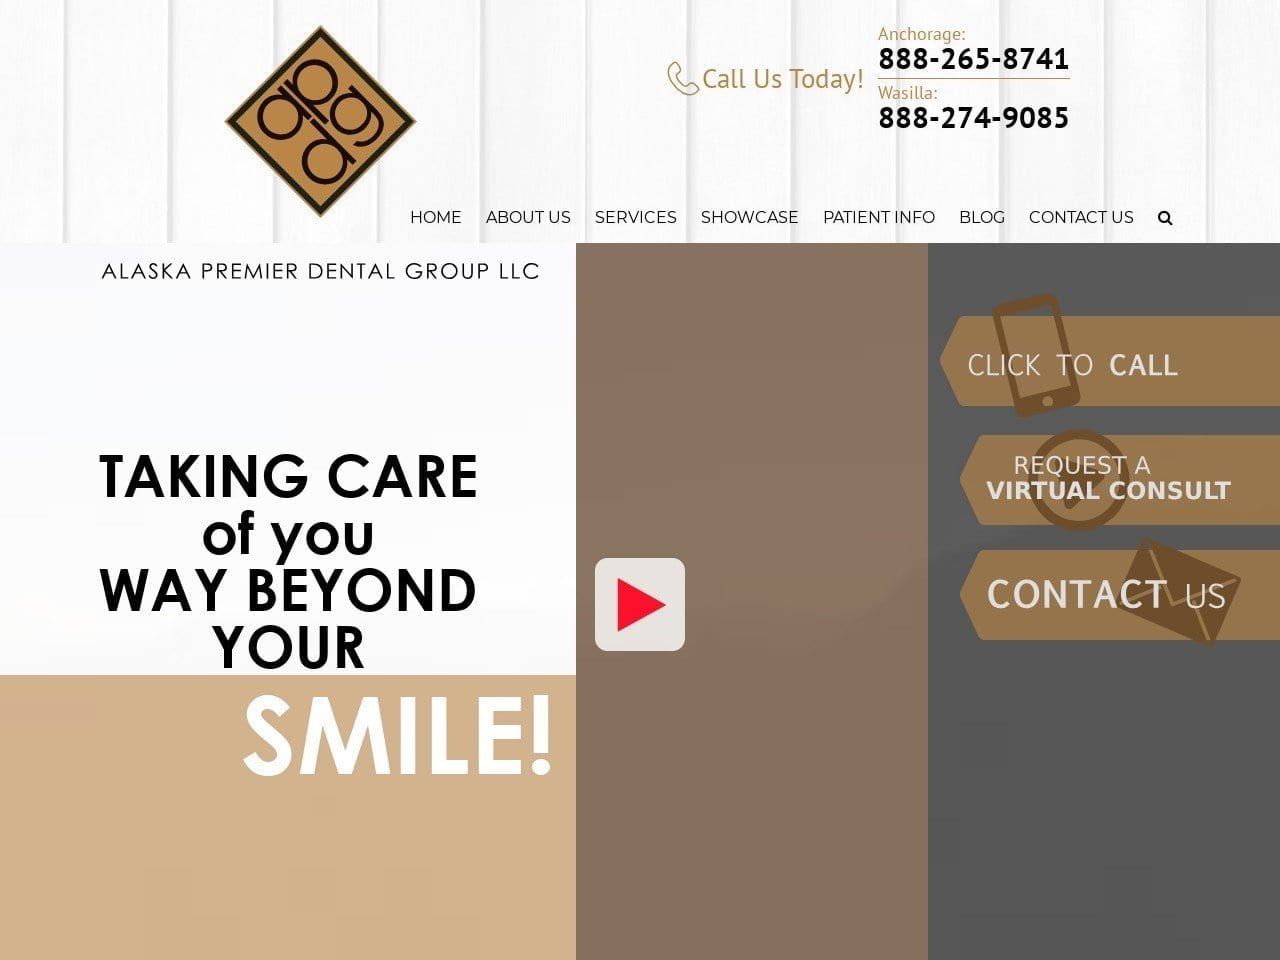 Alaska Premier Dental Group Website Screenshot from smilealaska.com